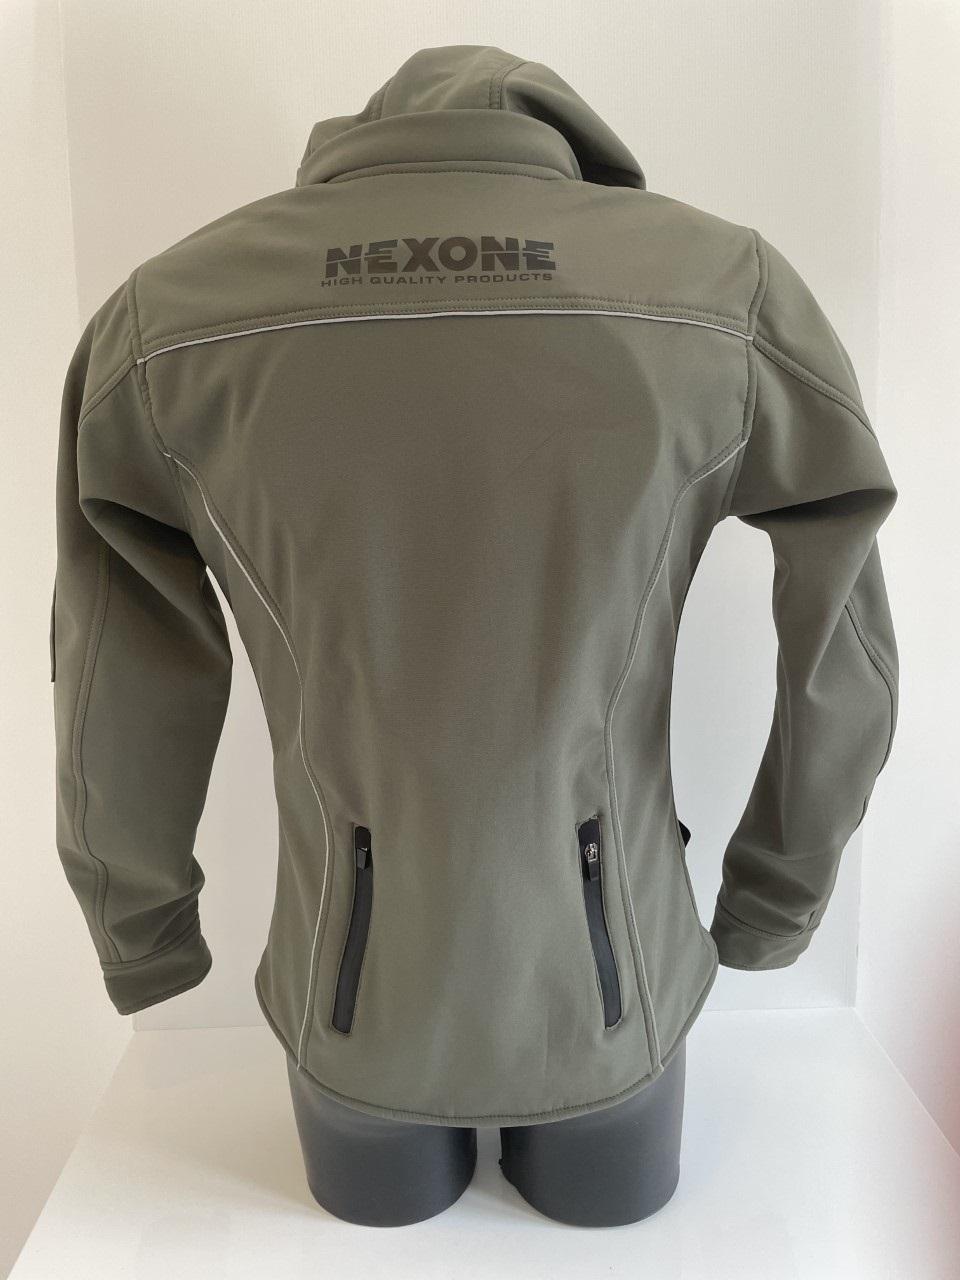 Blouson veste pour moto Femme Nexone Soft-Shell kaki Taille XS Lady homologué CE